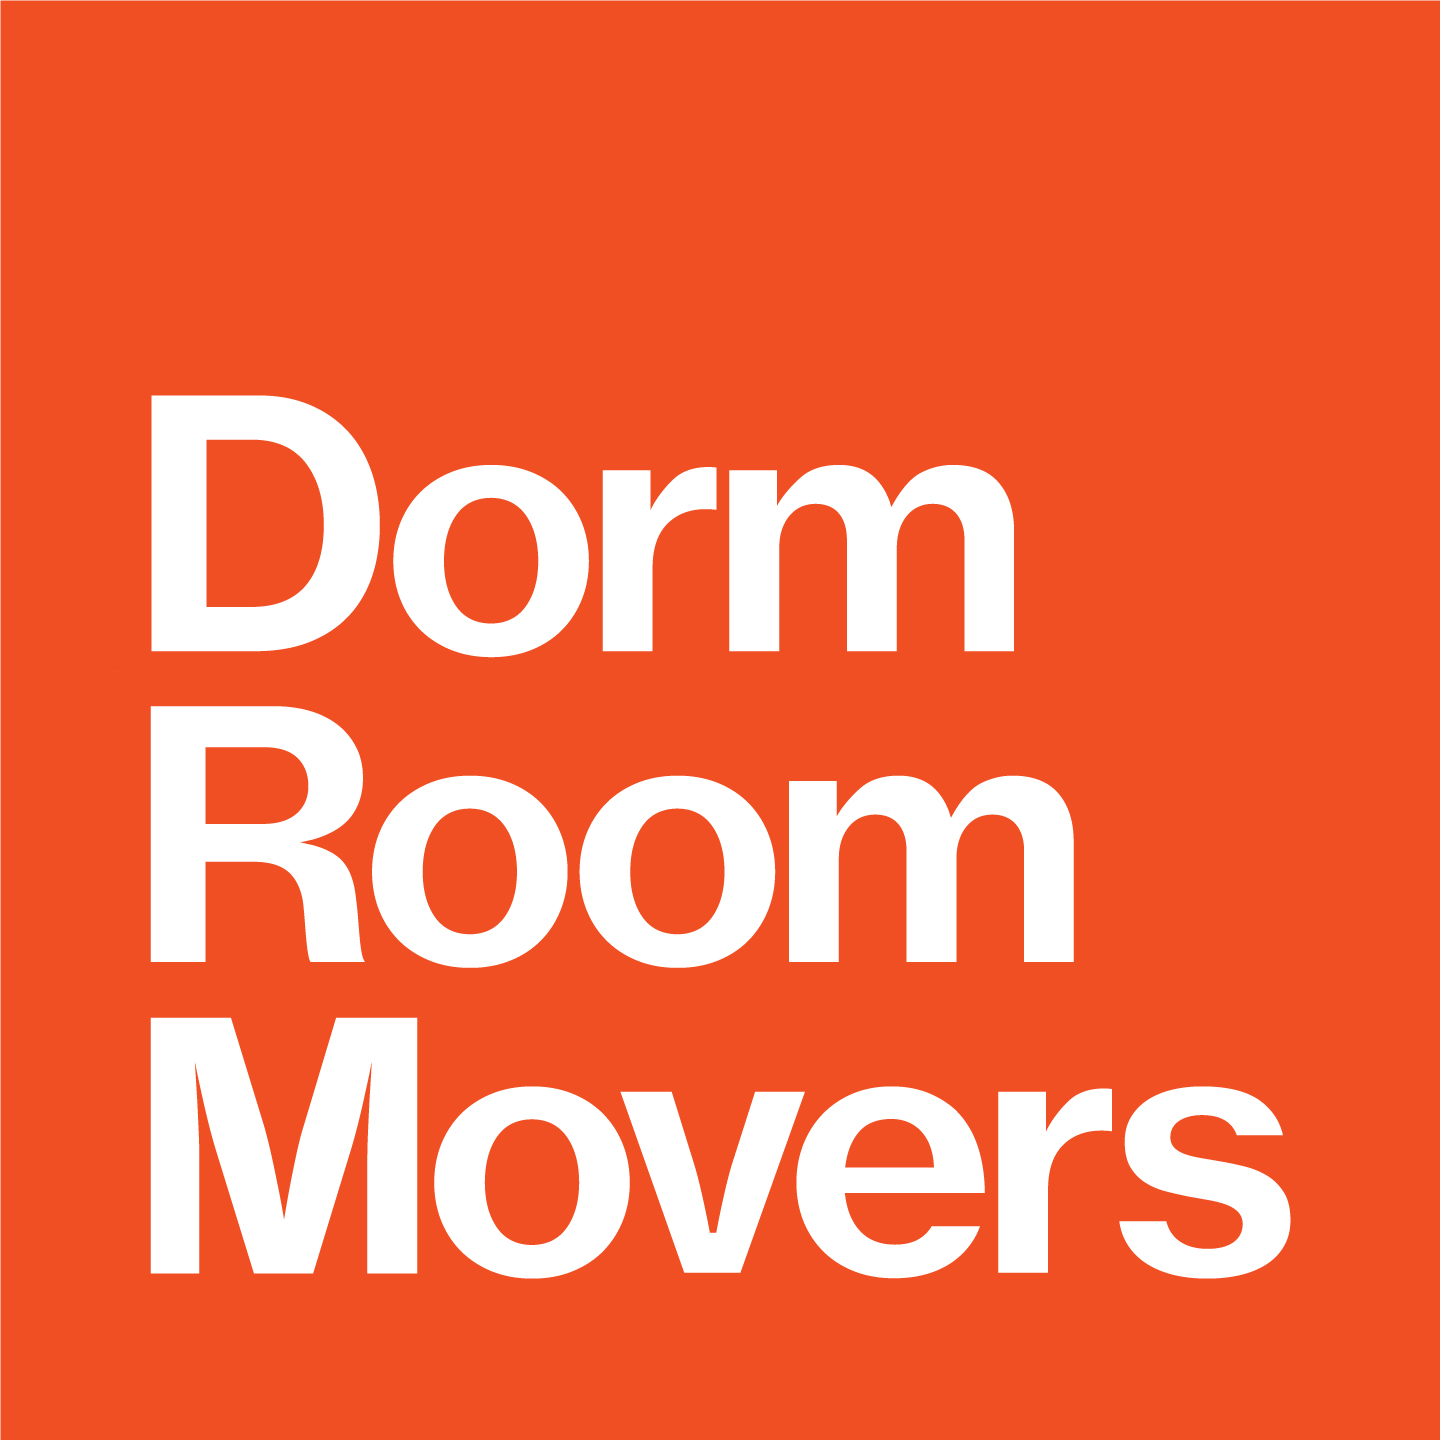 Dorm Room Movers logo